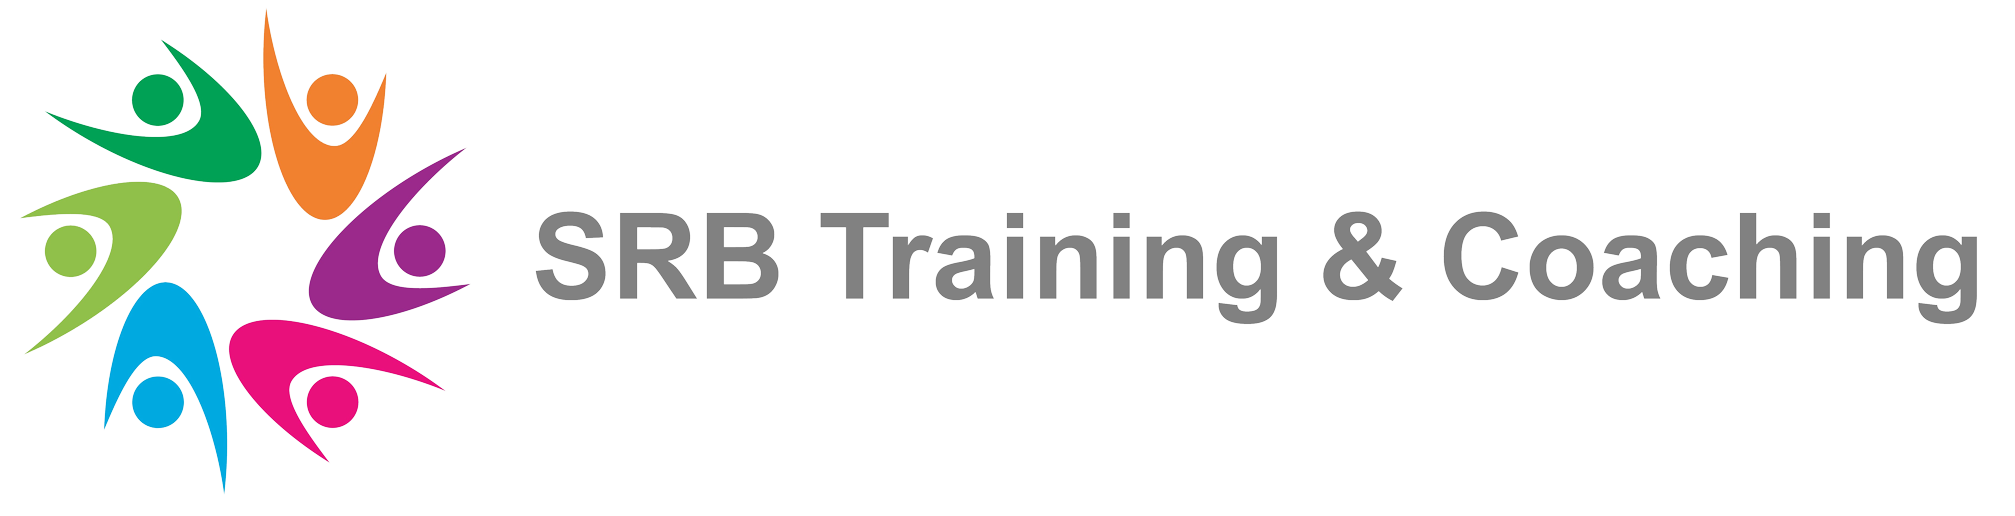 SRB Training & Coaching